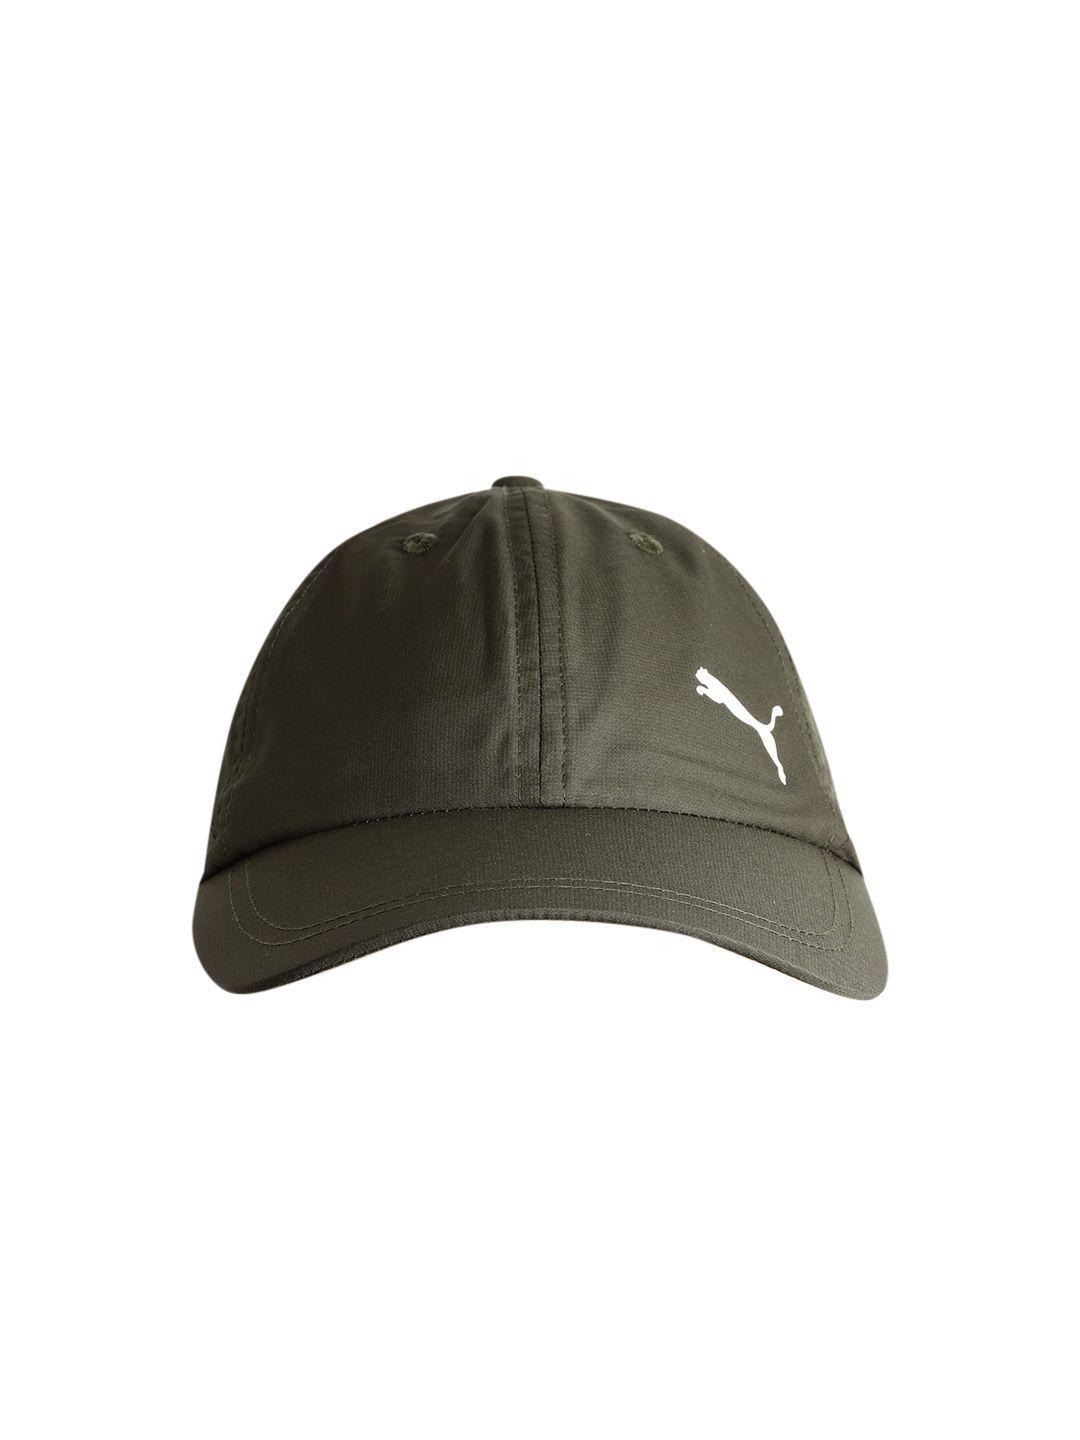 puma unisex olive green solid core visor cap